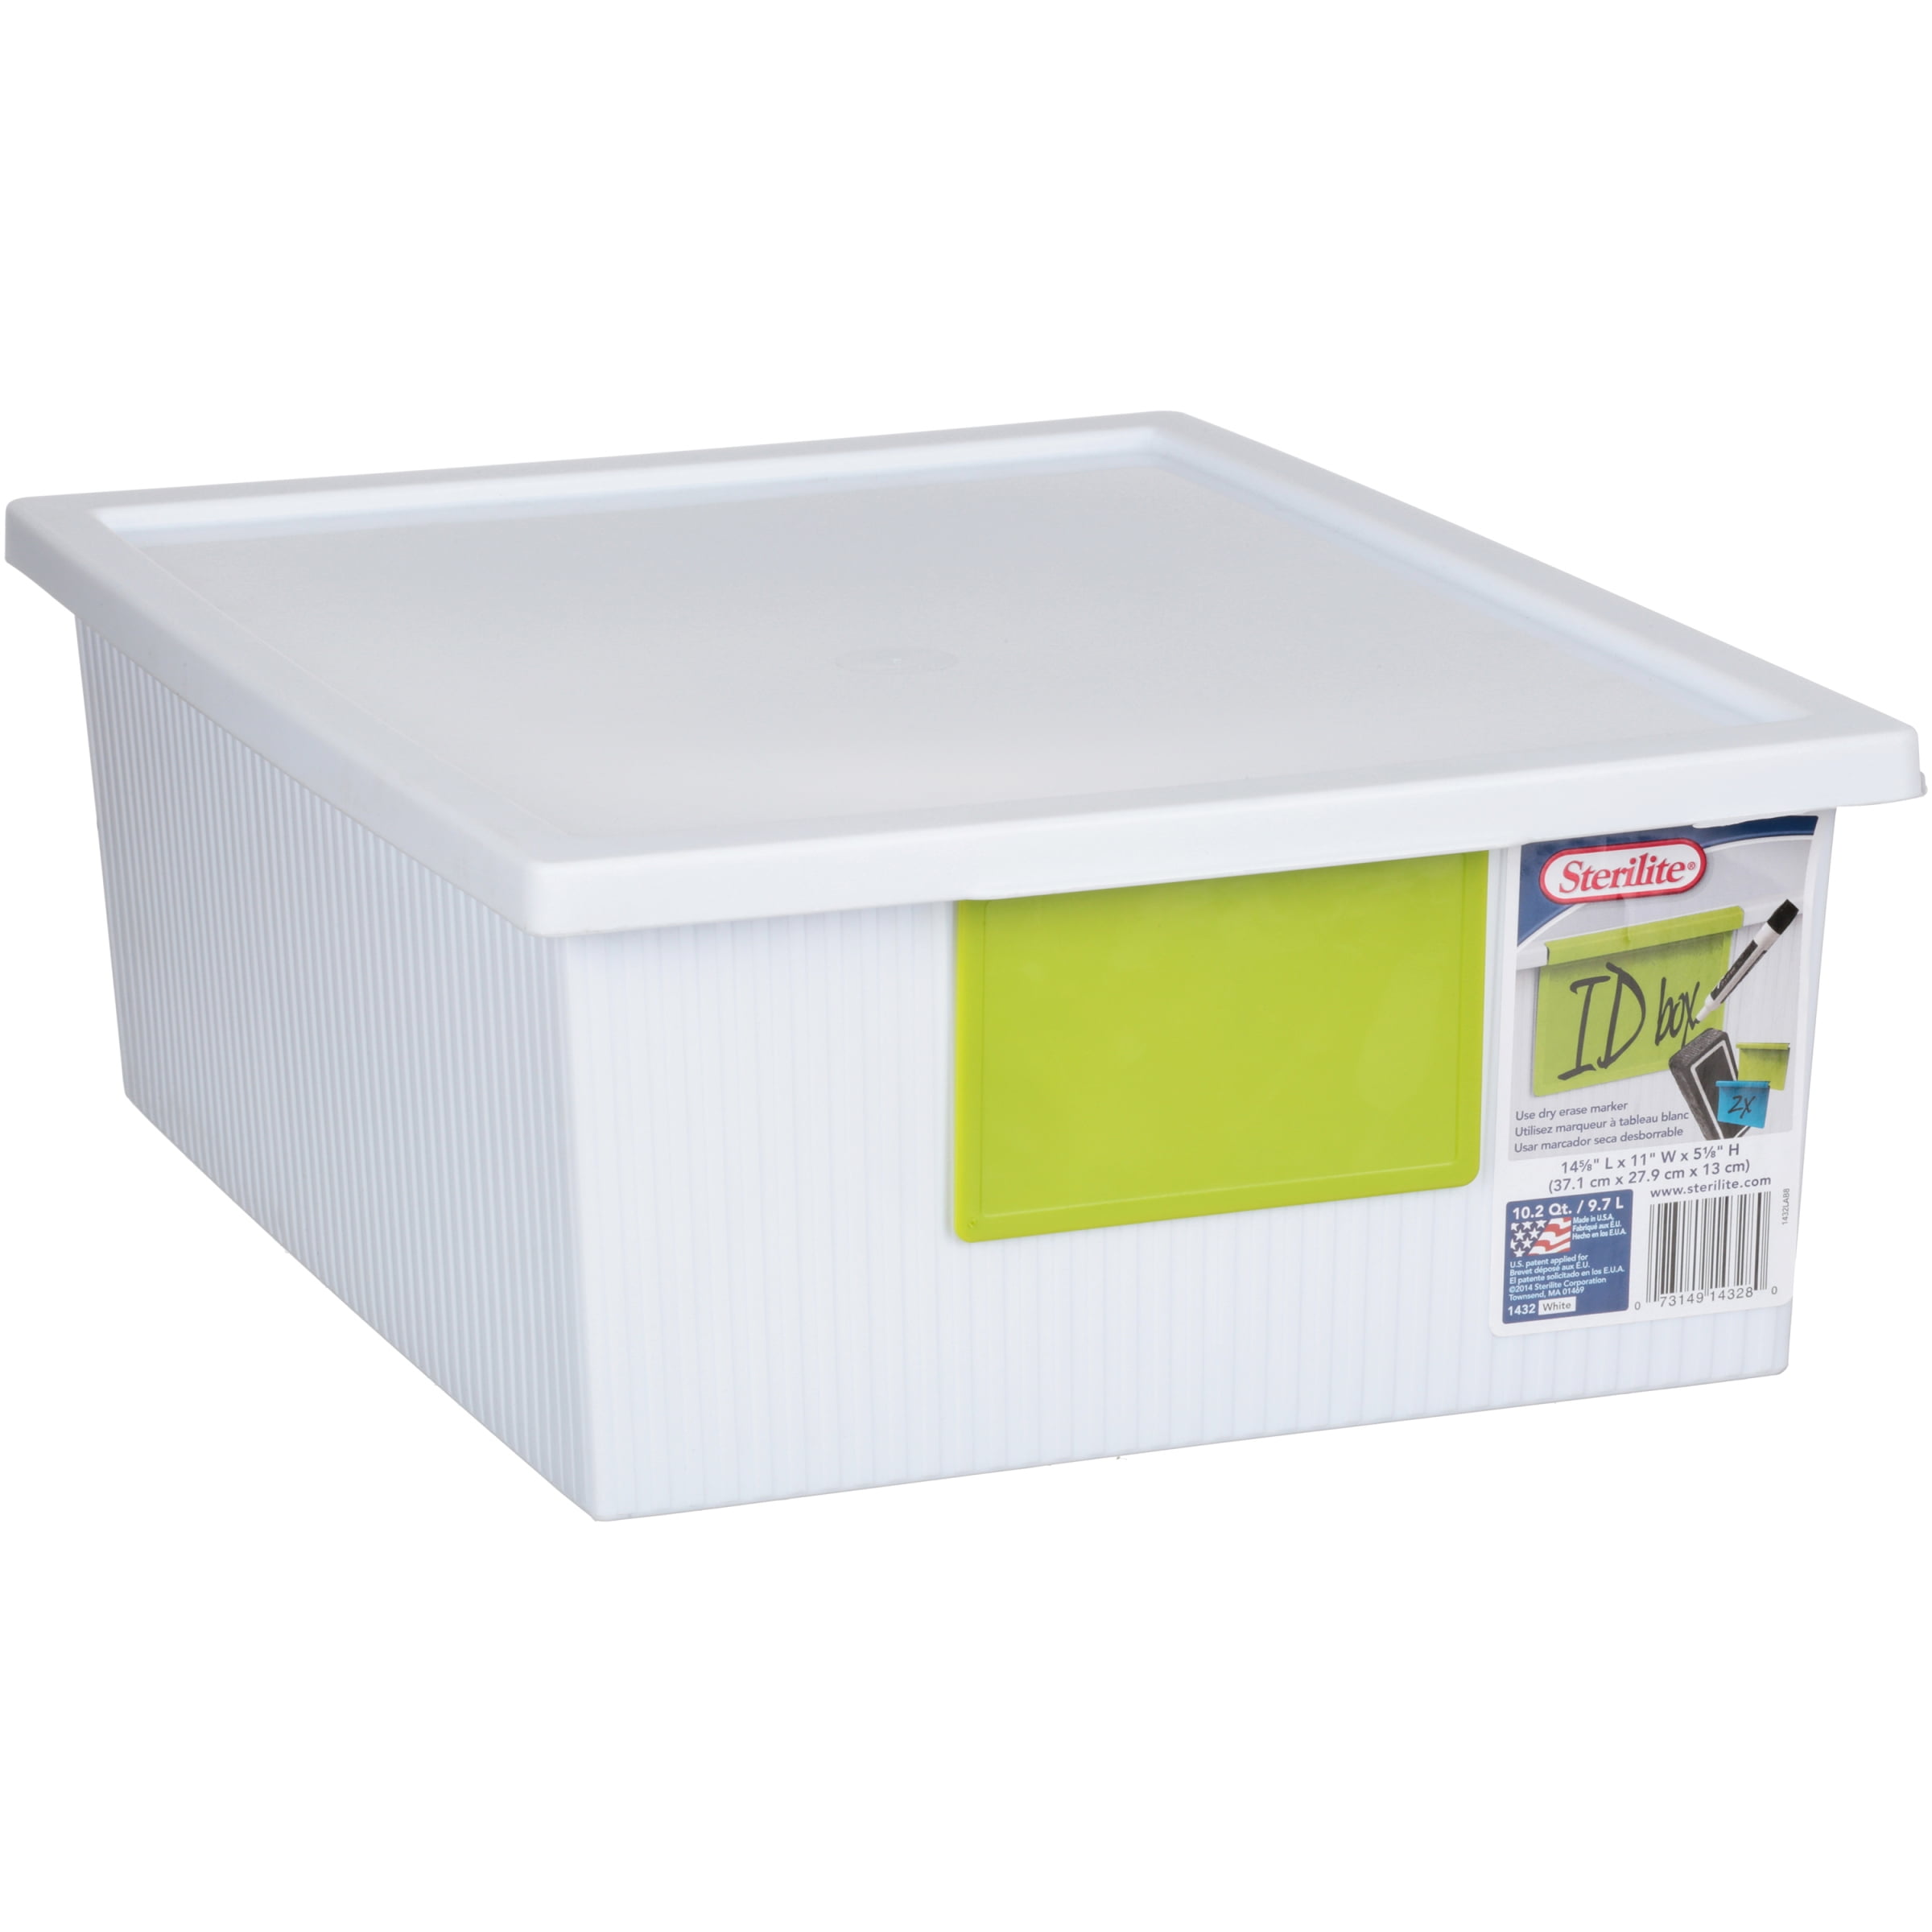 Sterilite 10.2 Quart ID Box- White (Available in Case of 6 or Single Unit)